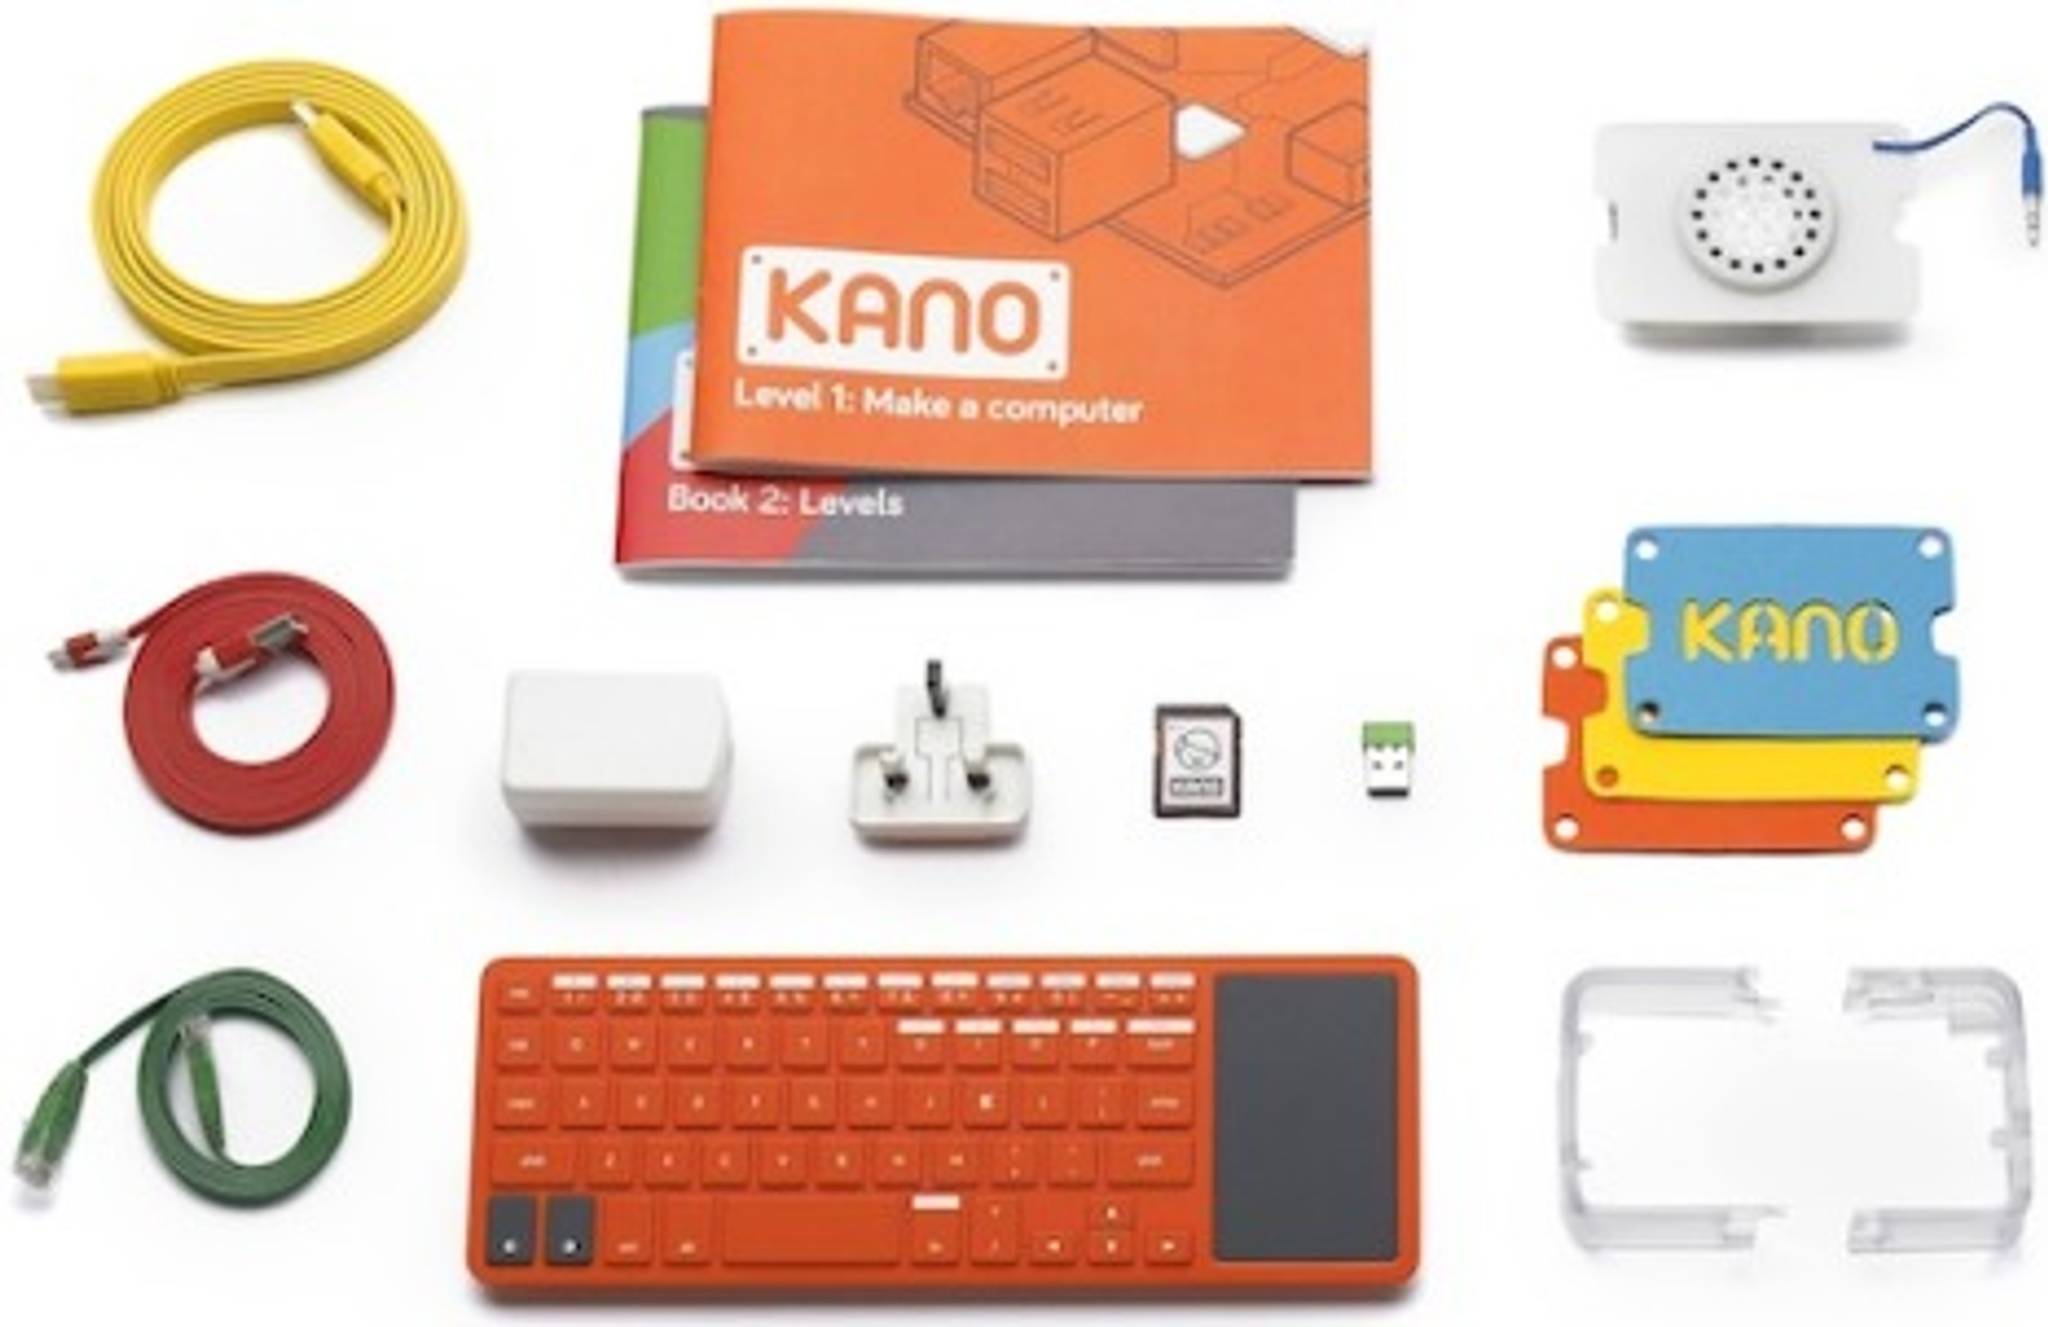 Kano lets kids build computers